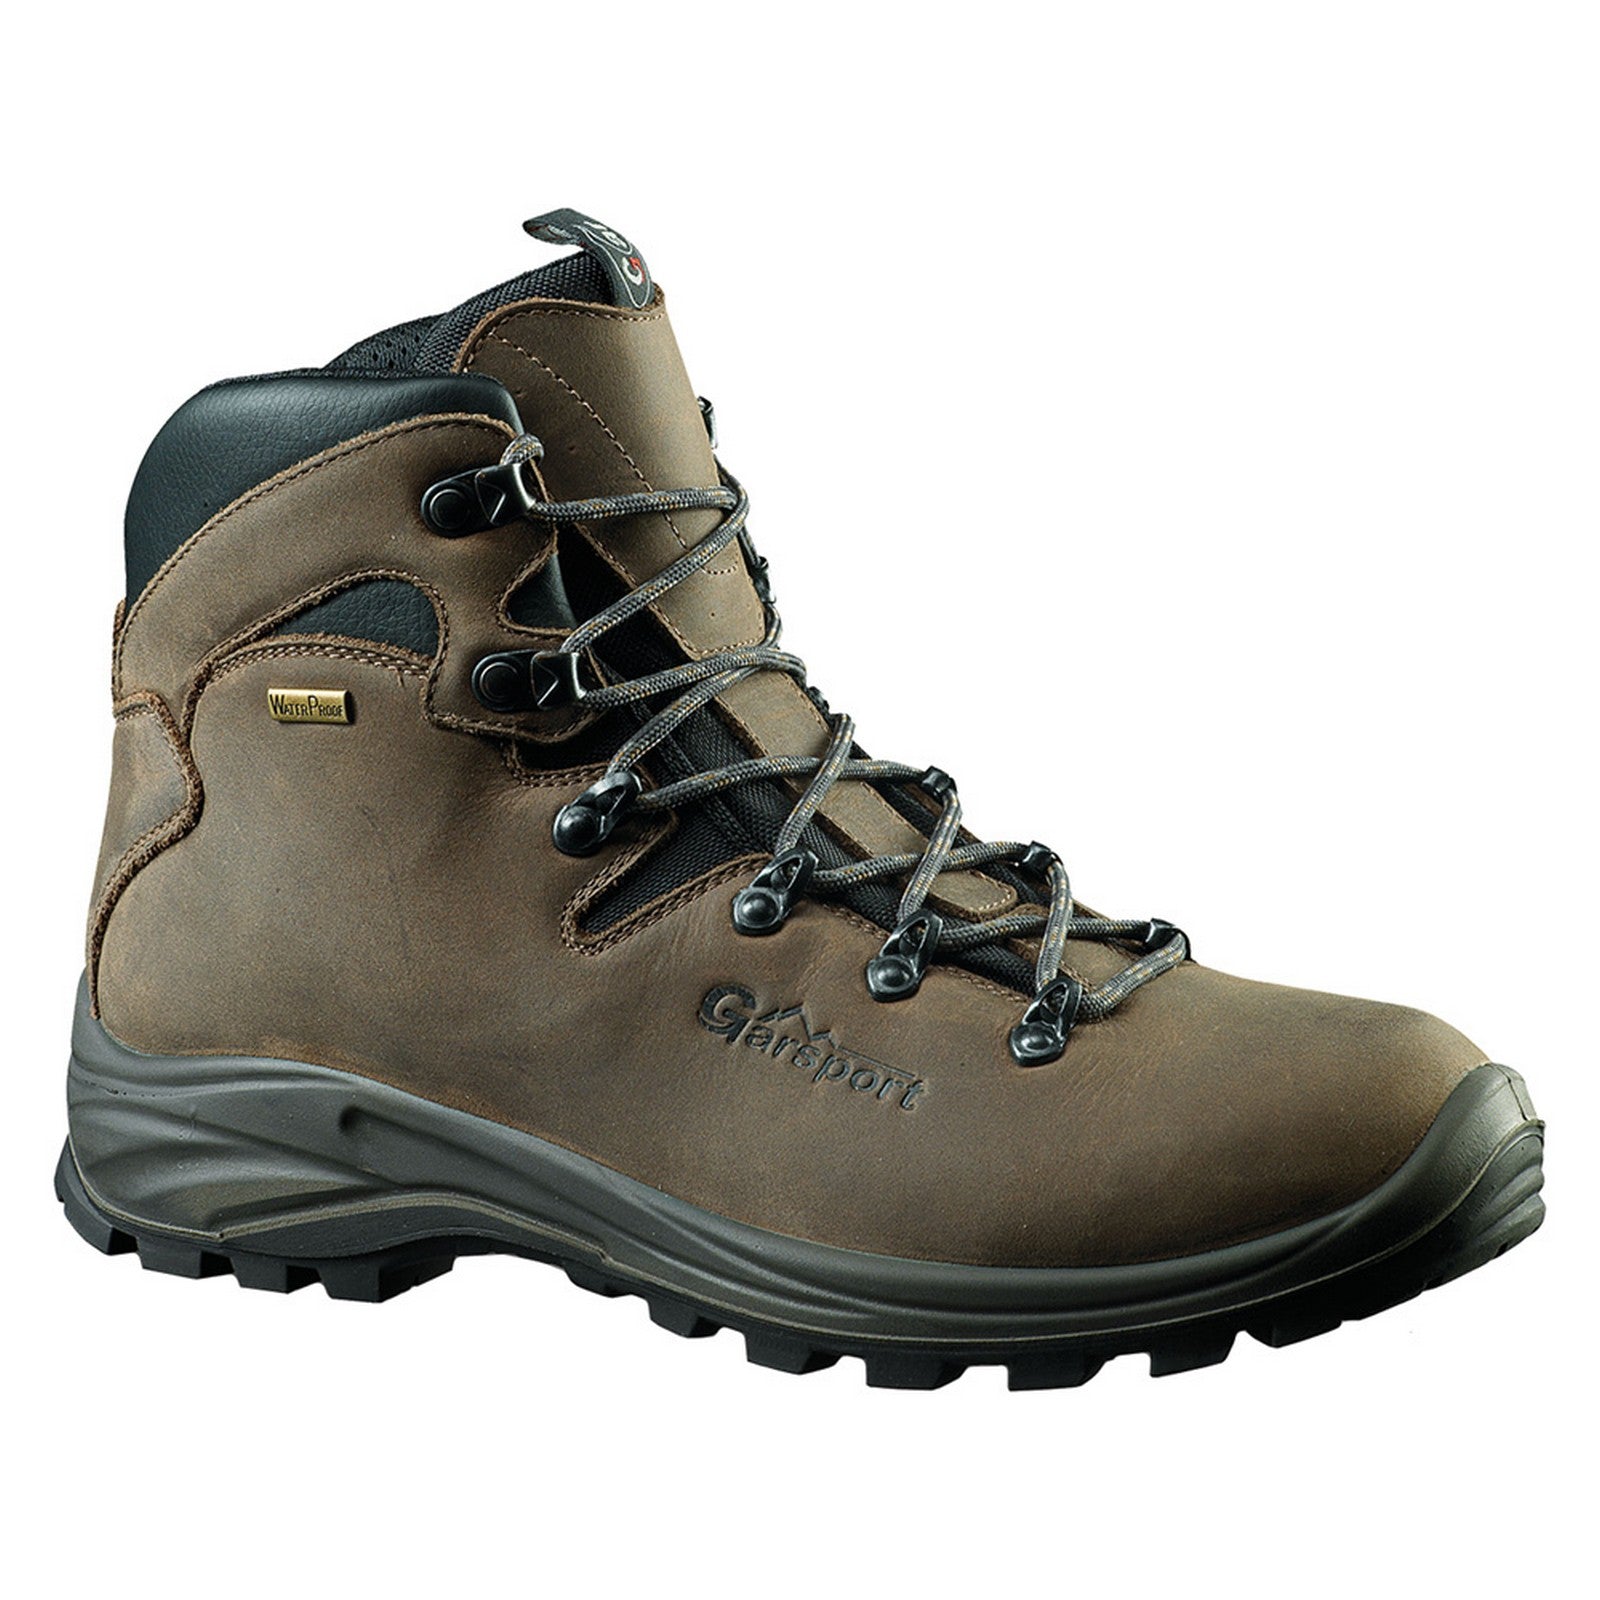 1coppia scarpe per trekking alte 'stelvio tex' n. 40 - marrone cod:ferx.1061230nlm